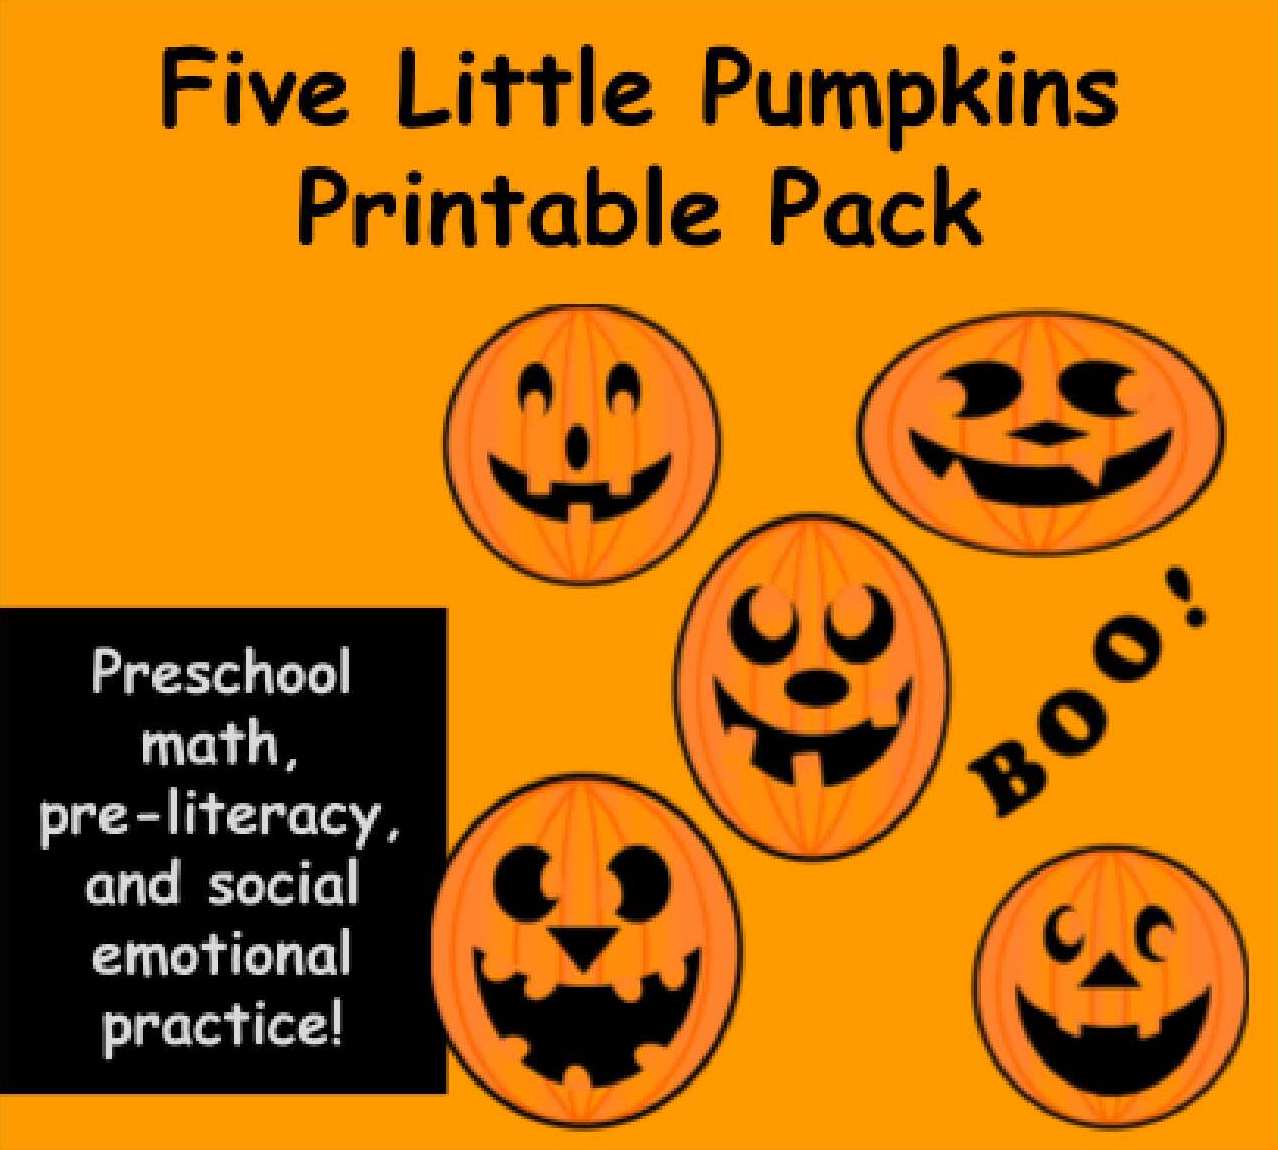 5 little Pumpkins printable